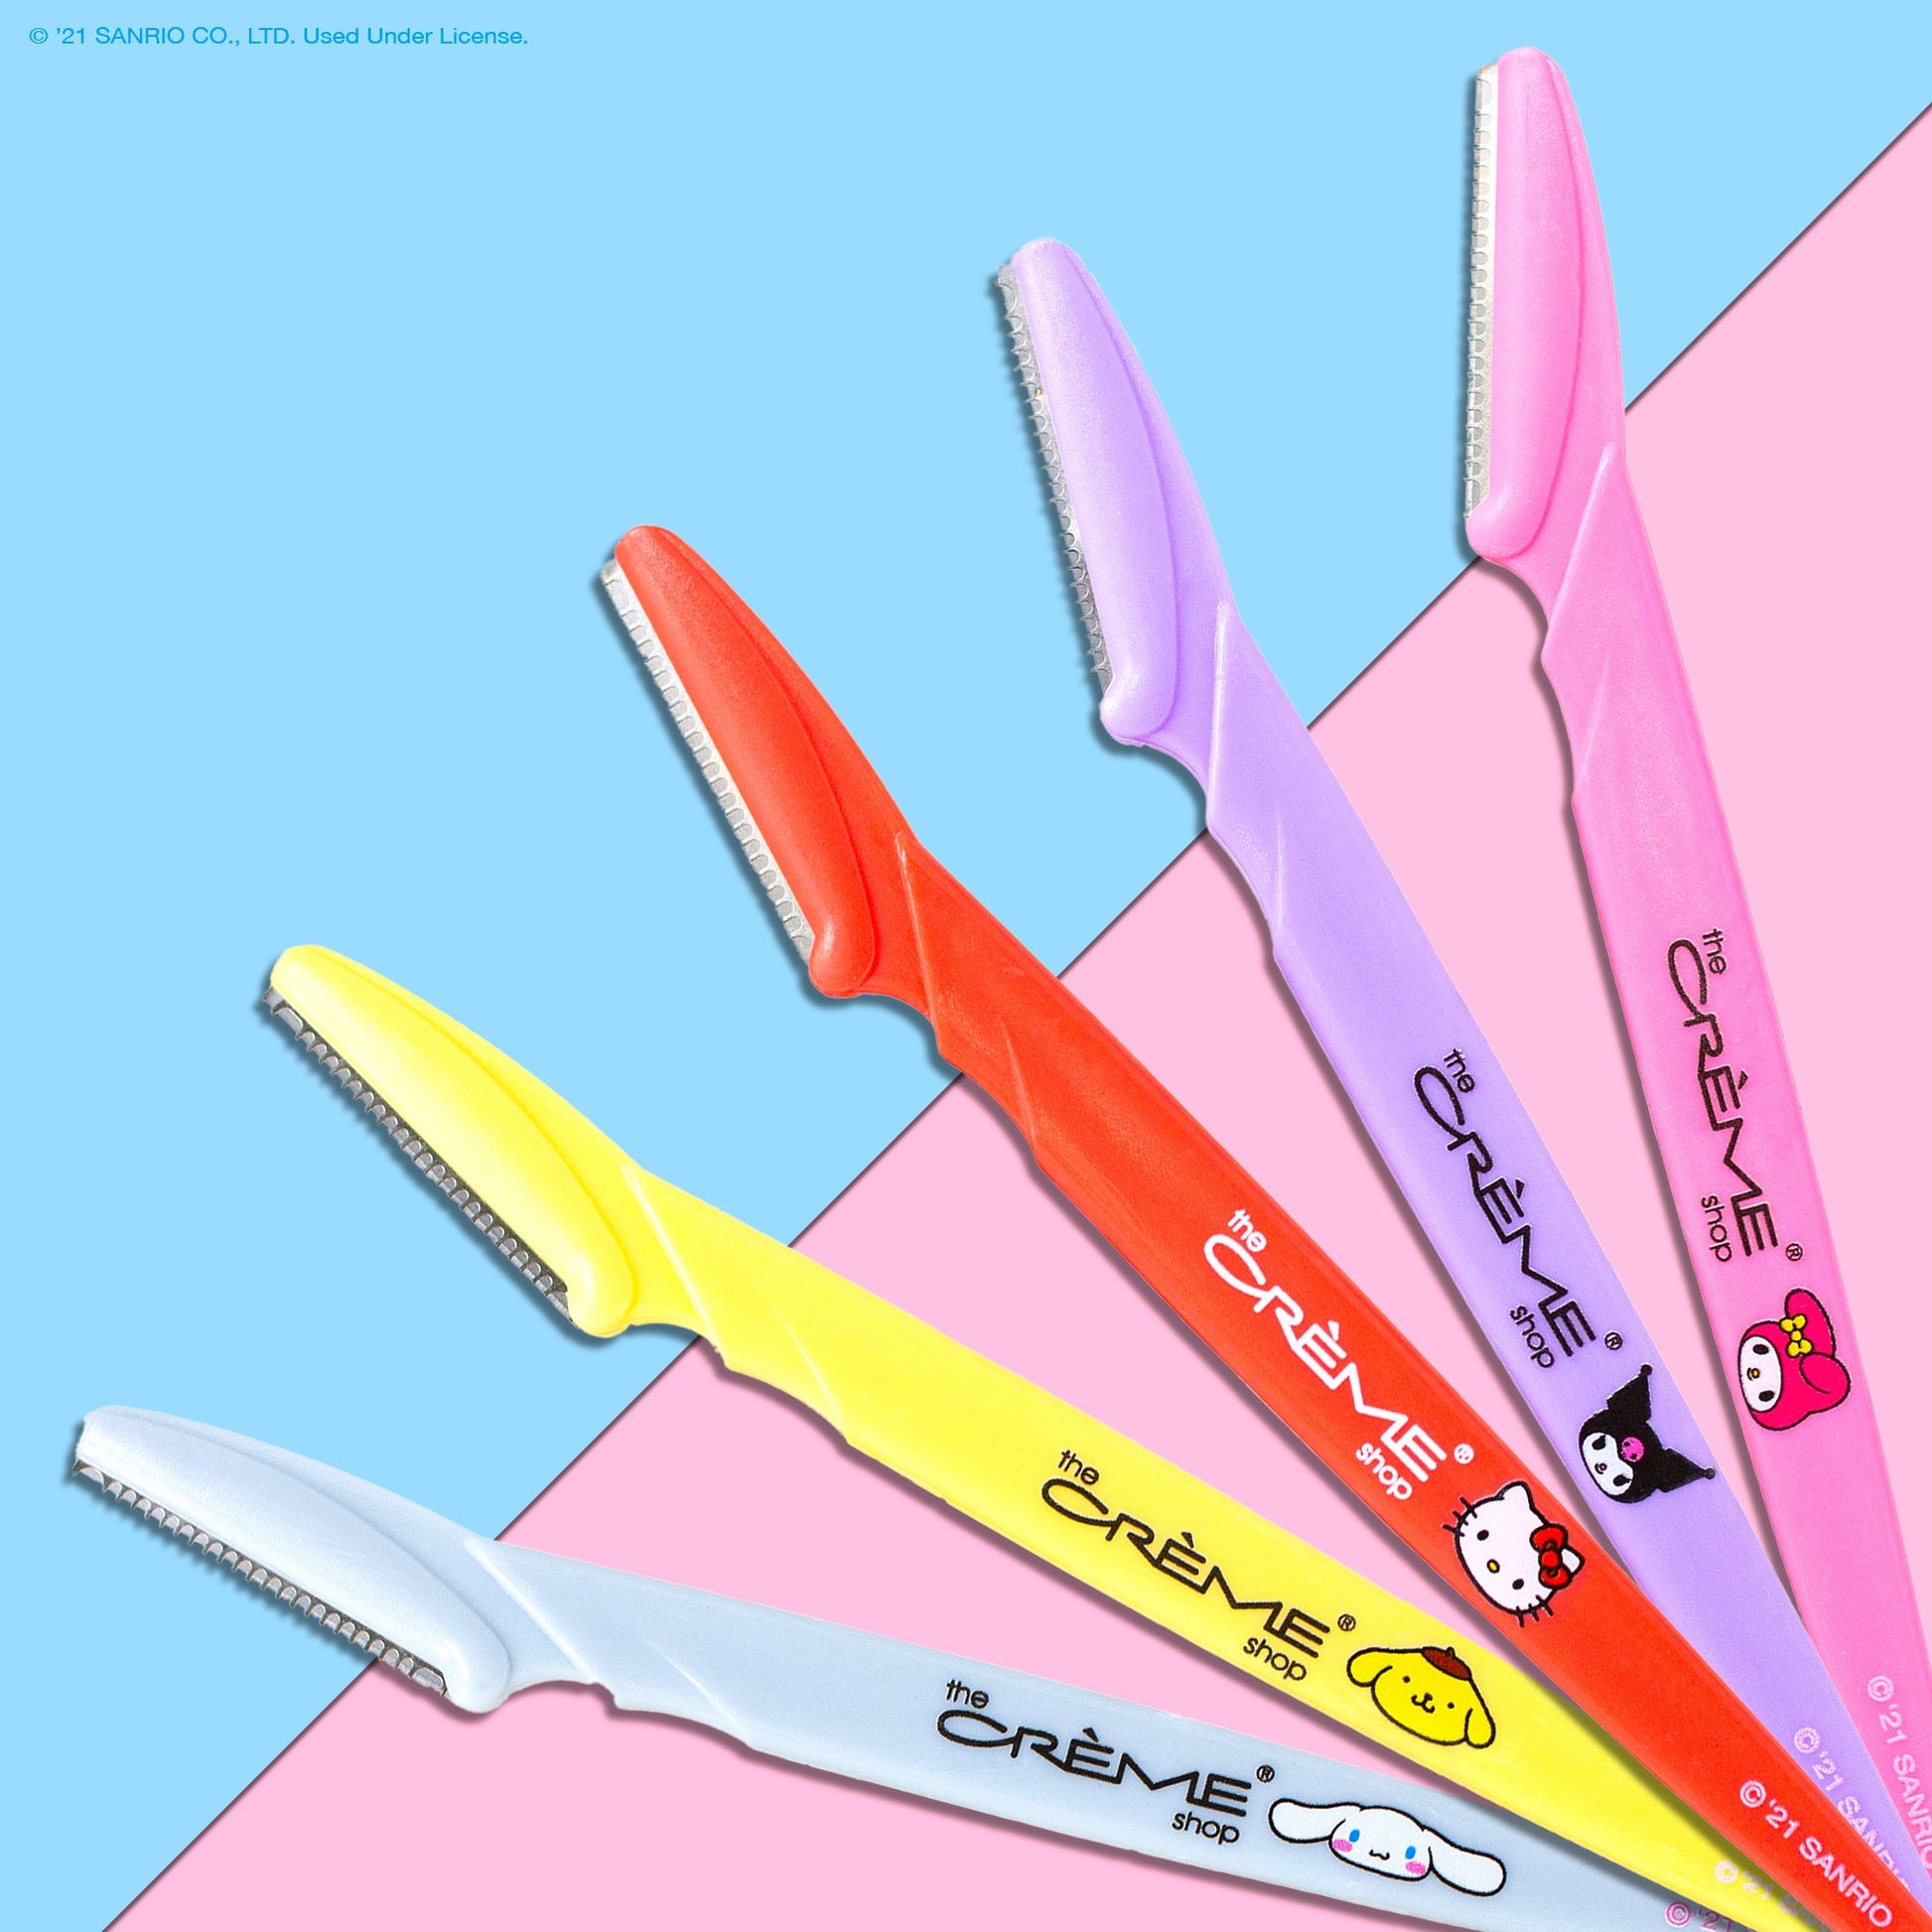 Friends Over Fuzz! Perfect Arch Shaping Dermaplane Razors (Set of 5) Razors The Crème Shop x Sanrio 